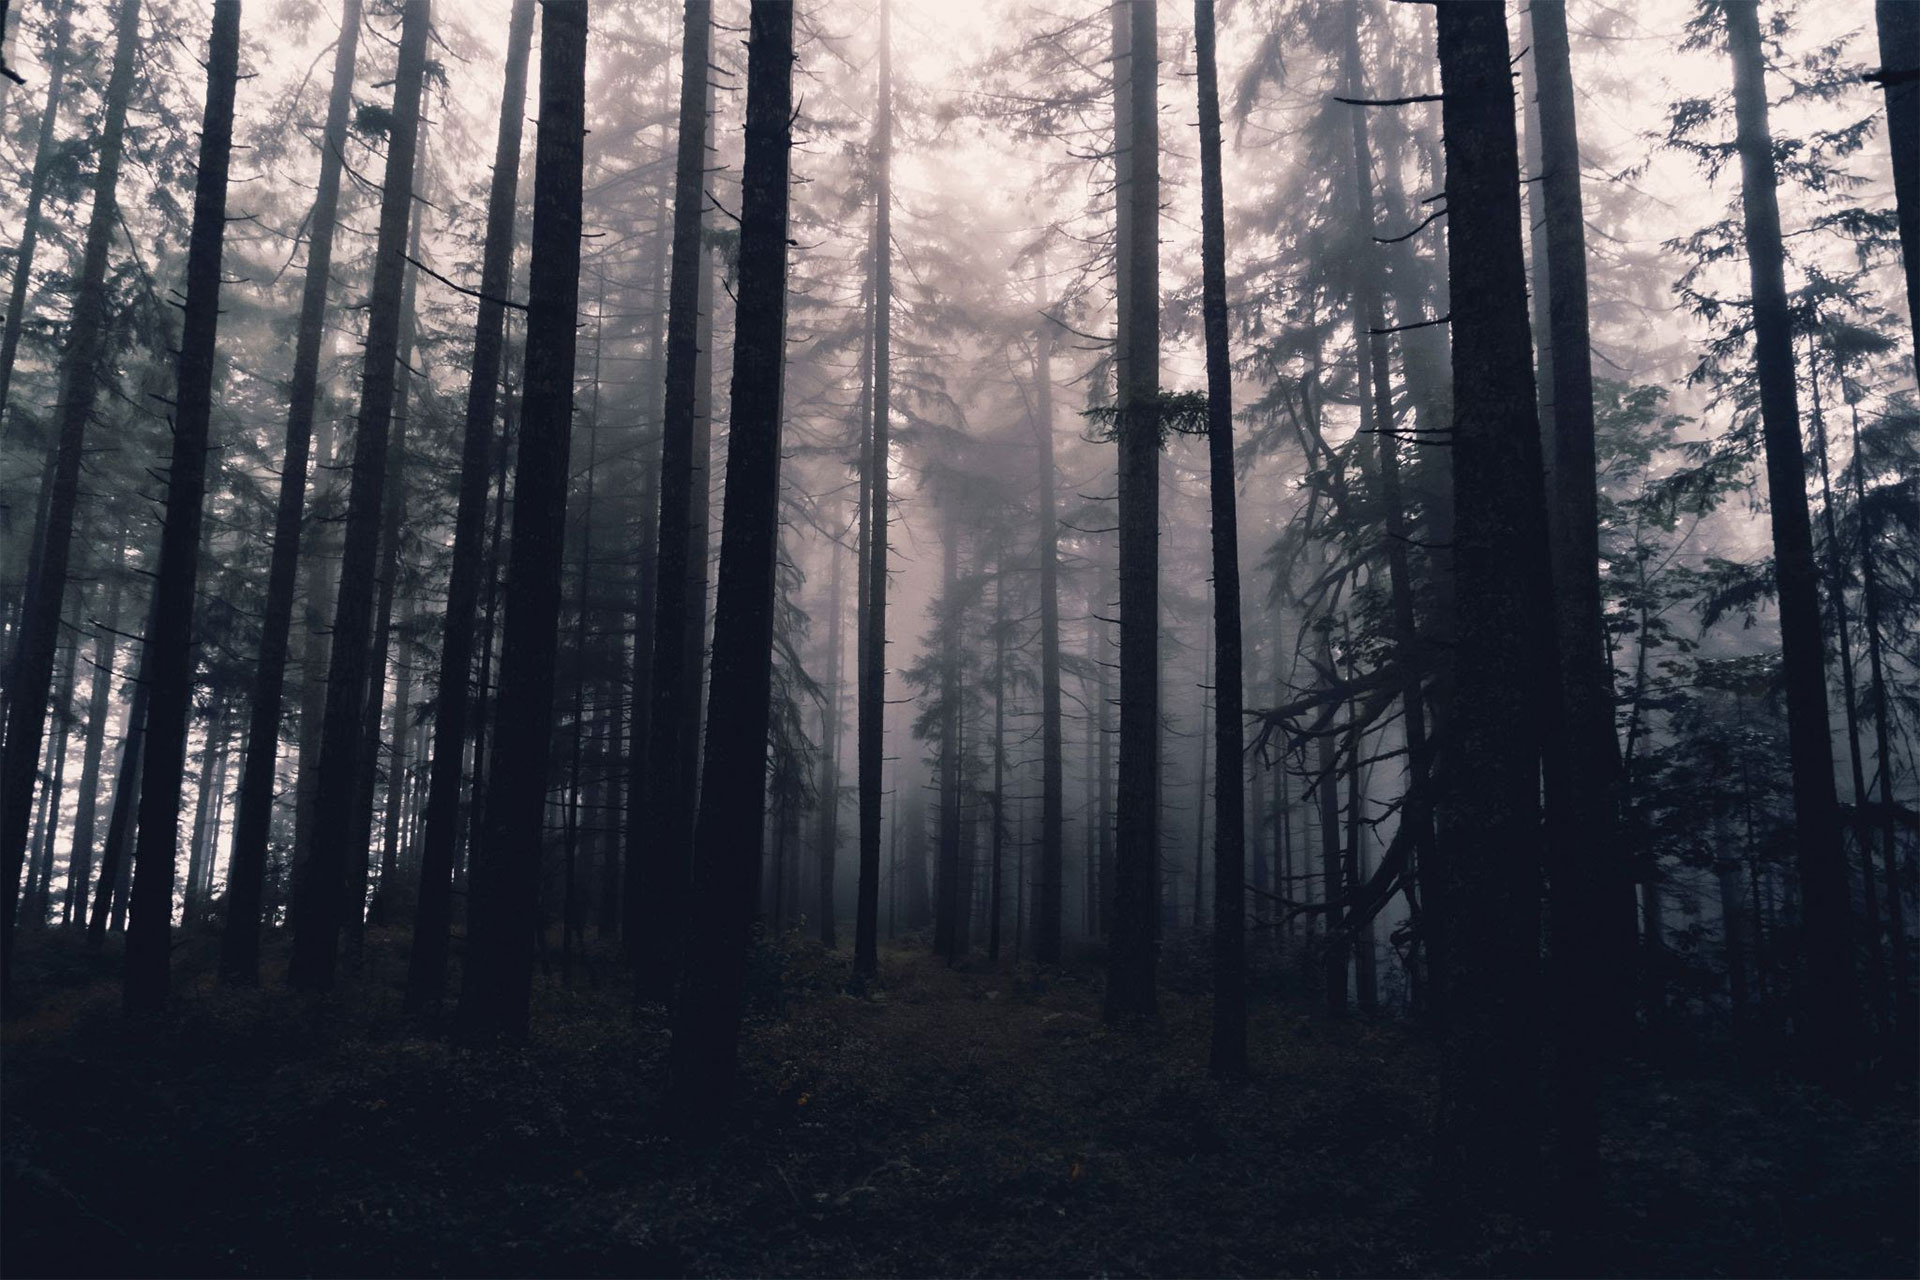 Haunted Woods